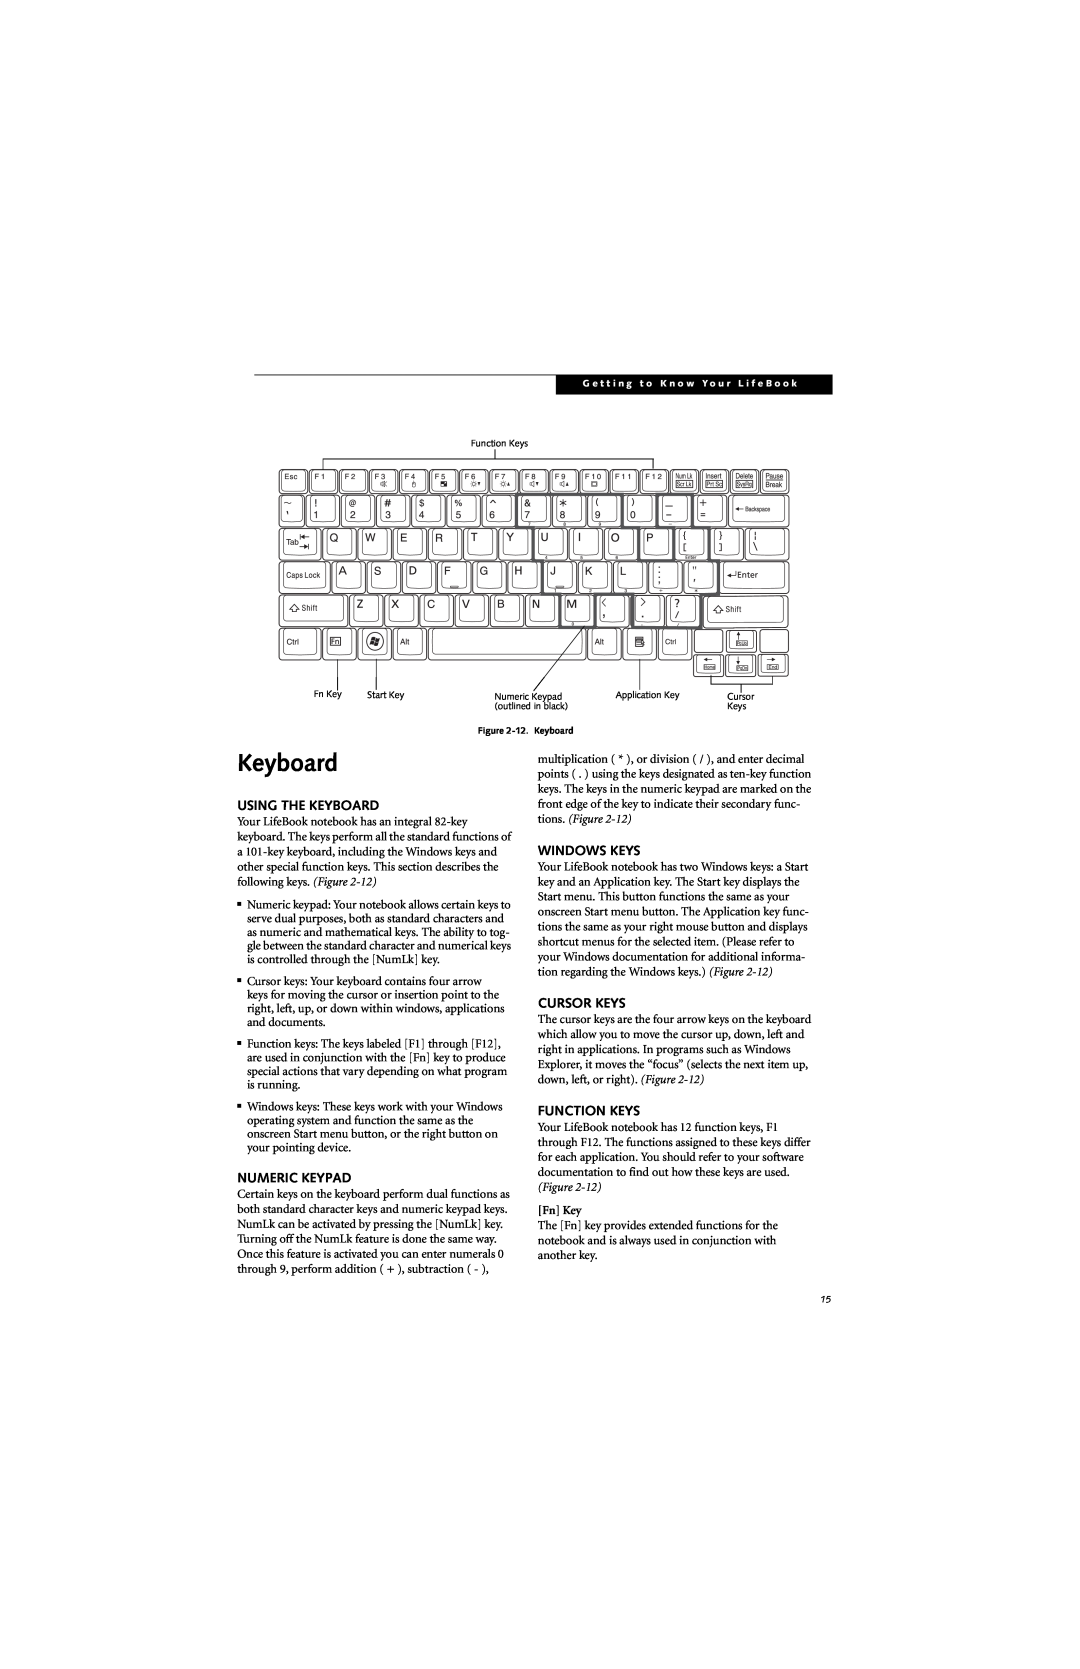 Fujitsu B6220 manual Using The Keyboard, Numeric Keypad, Windows Keys, Cursor Keys, Function Keys, Fn Key 